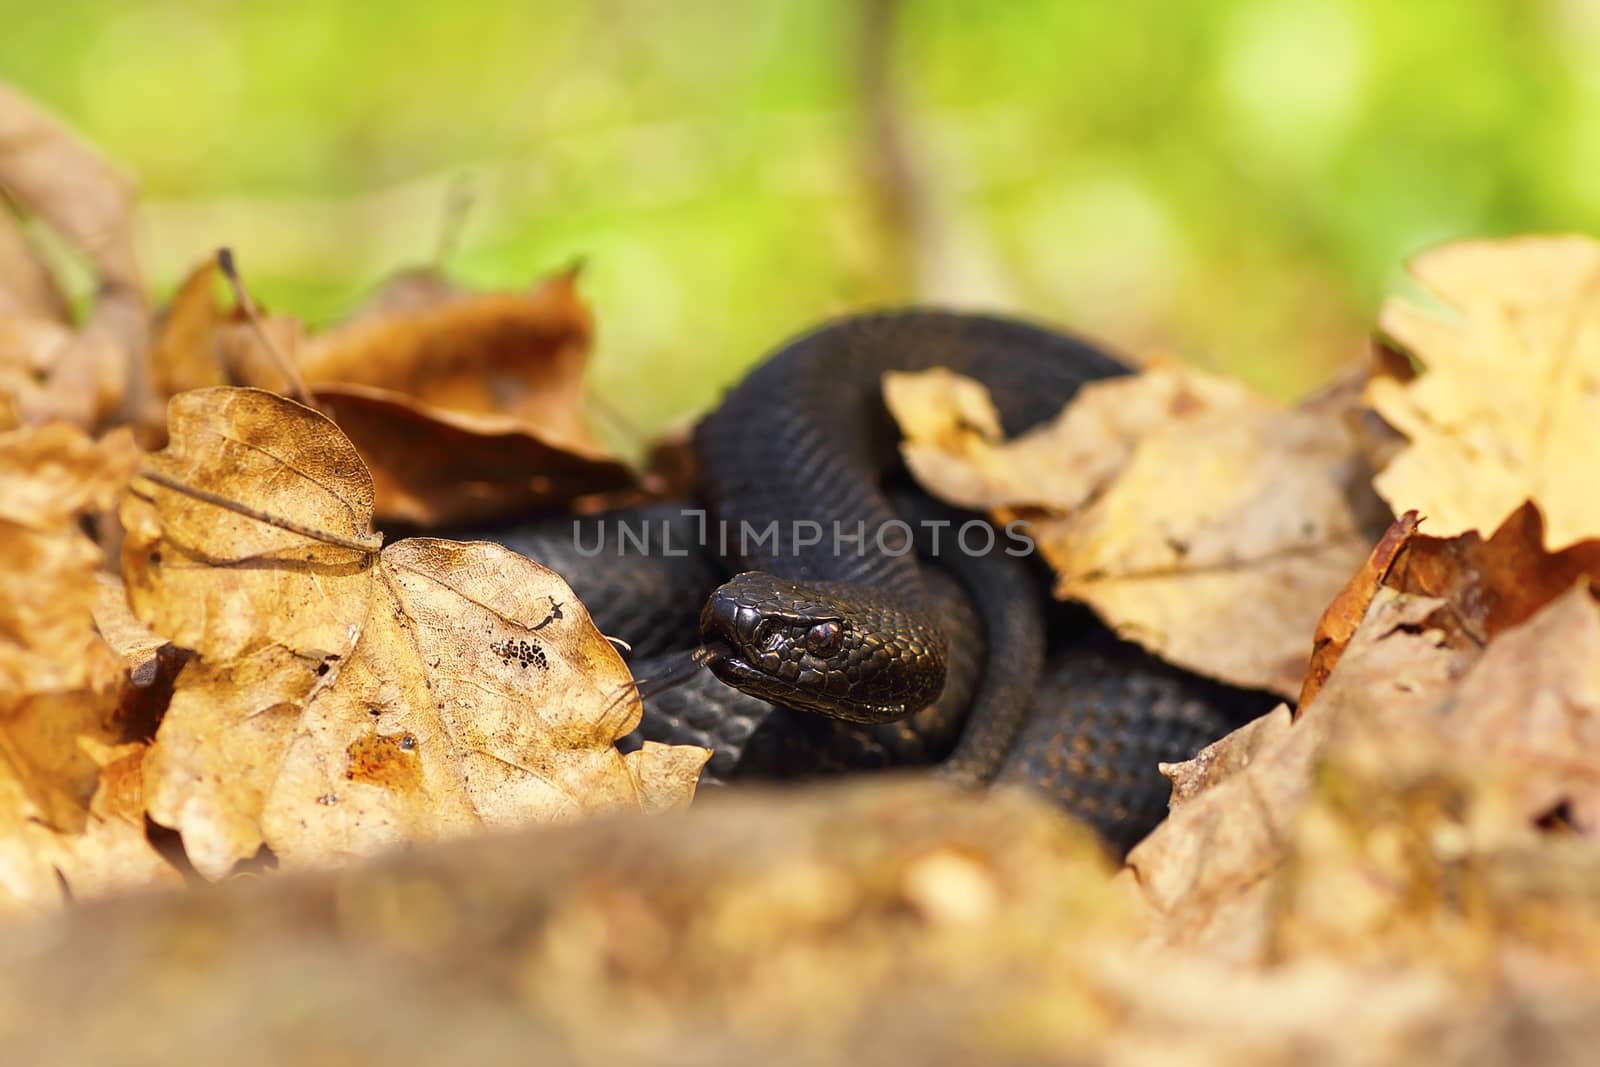 nikolskii black viper hiding amongst leaves by taviphoto